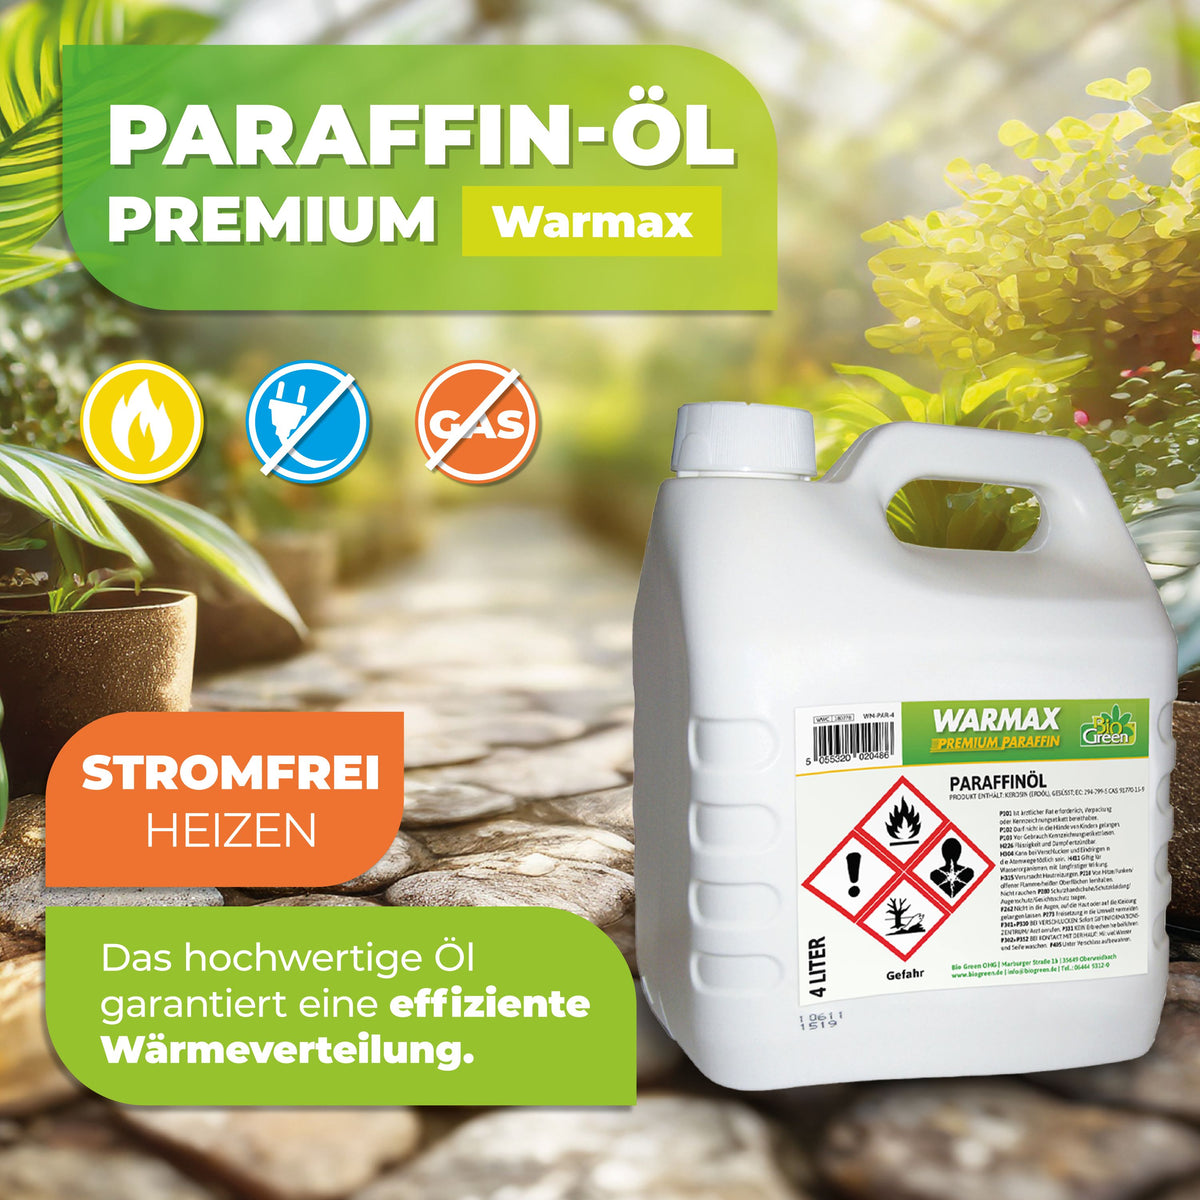 BioGreen Paraffin-Öl Warmax Premium Features